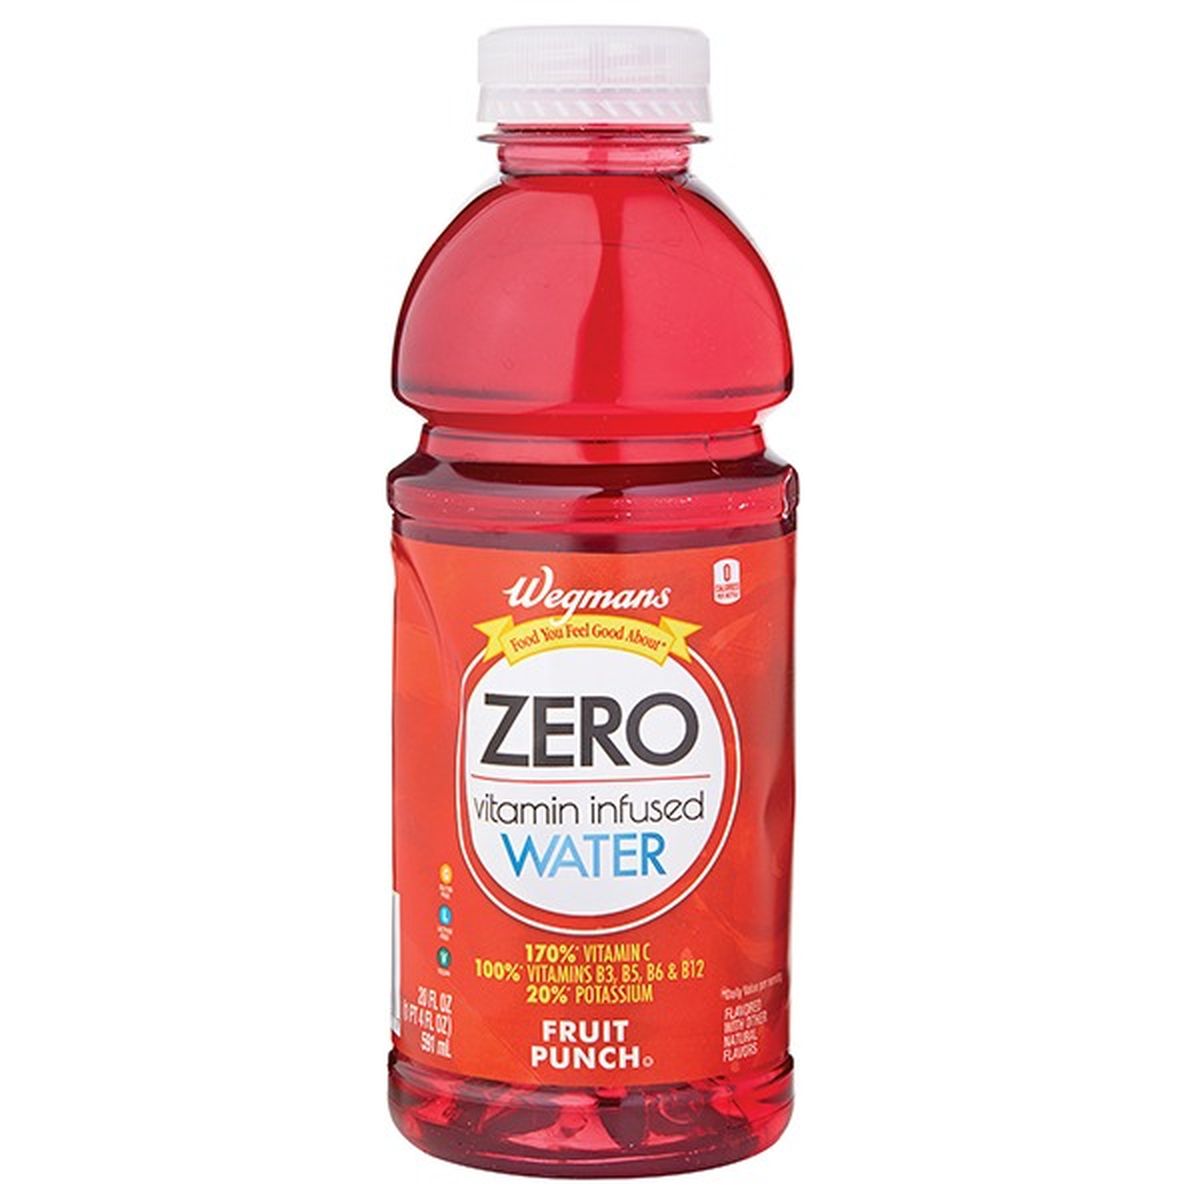 Calories in Wegmans Zero Vitamin Infused Water, Fruit Punch